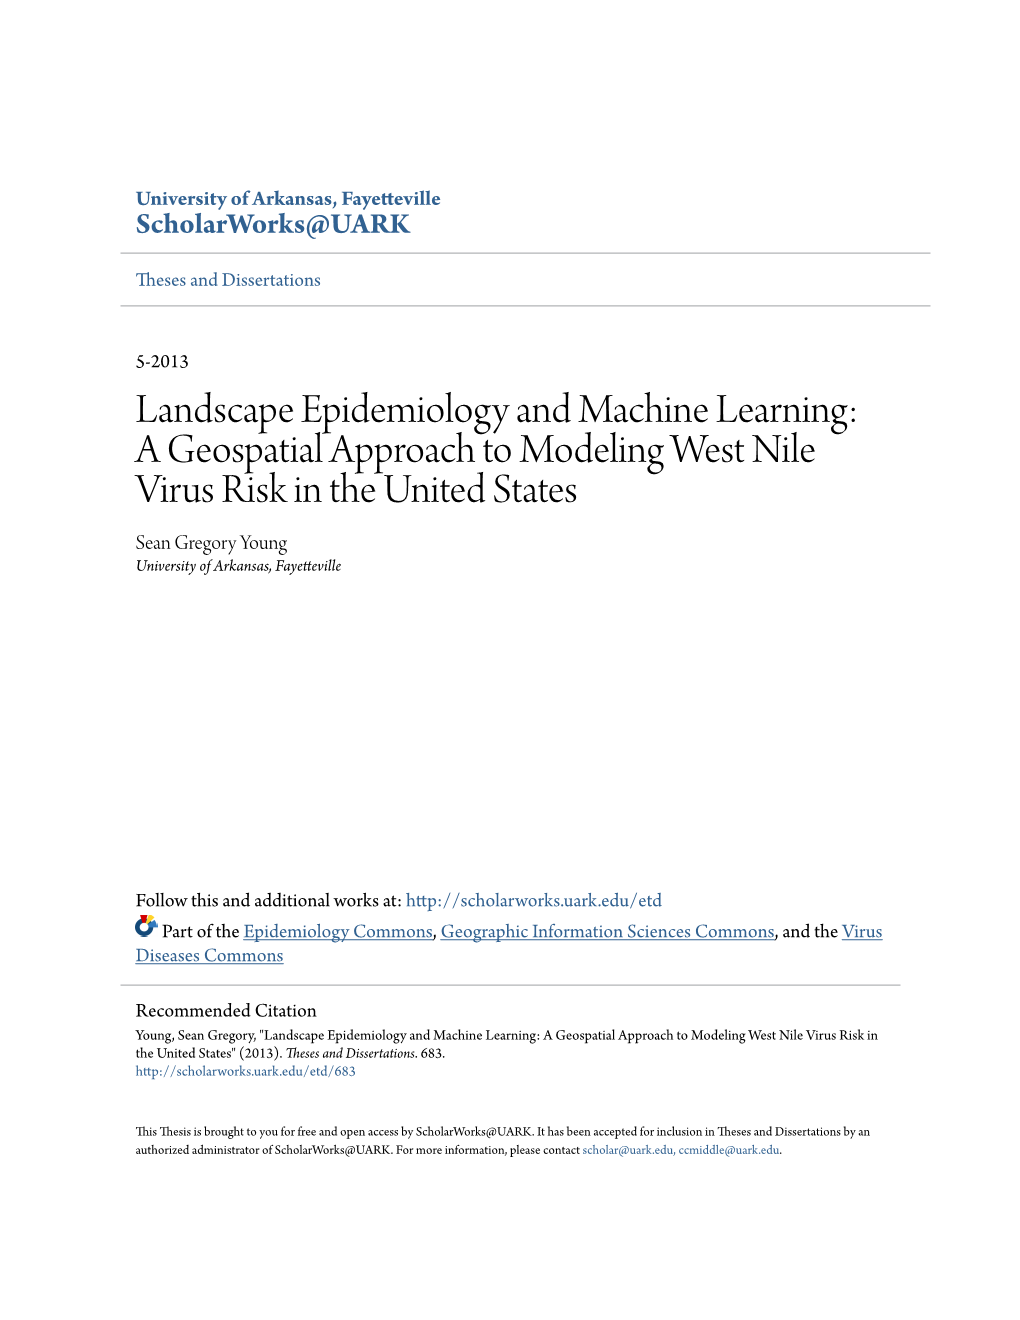 Landscape Epidemiology and Machine Learning